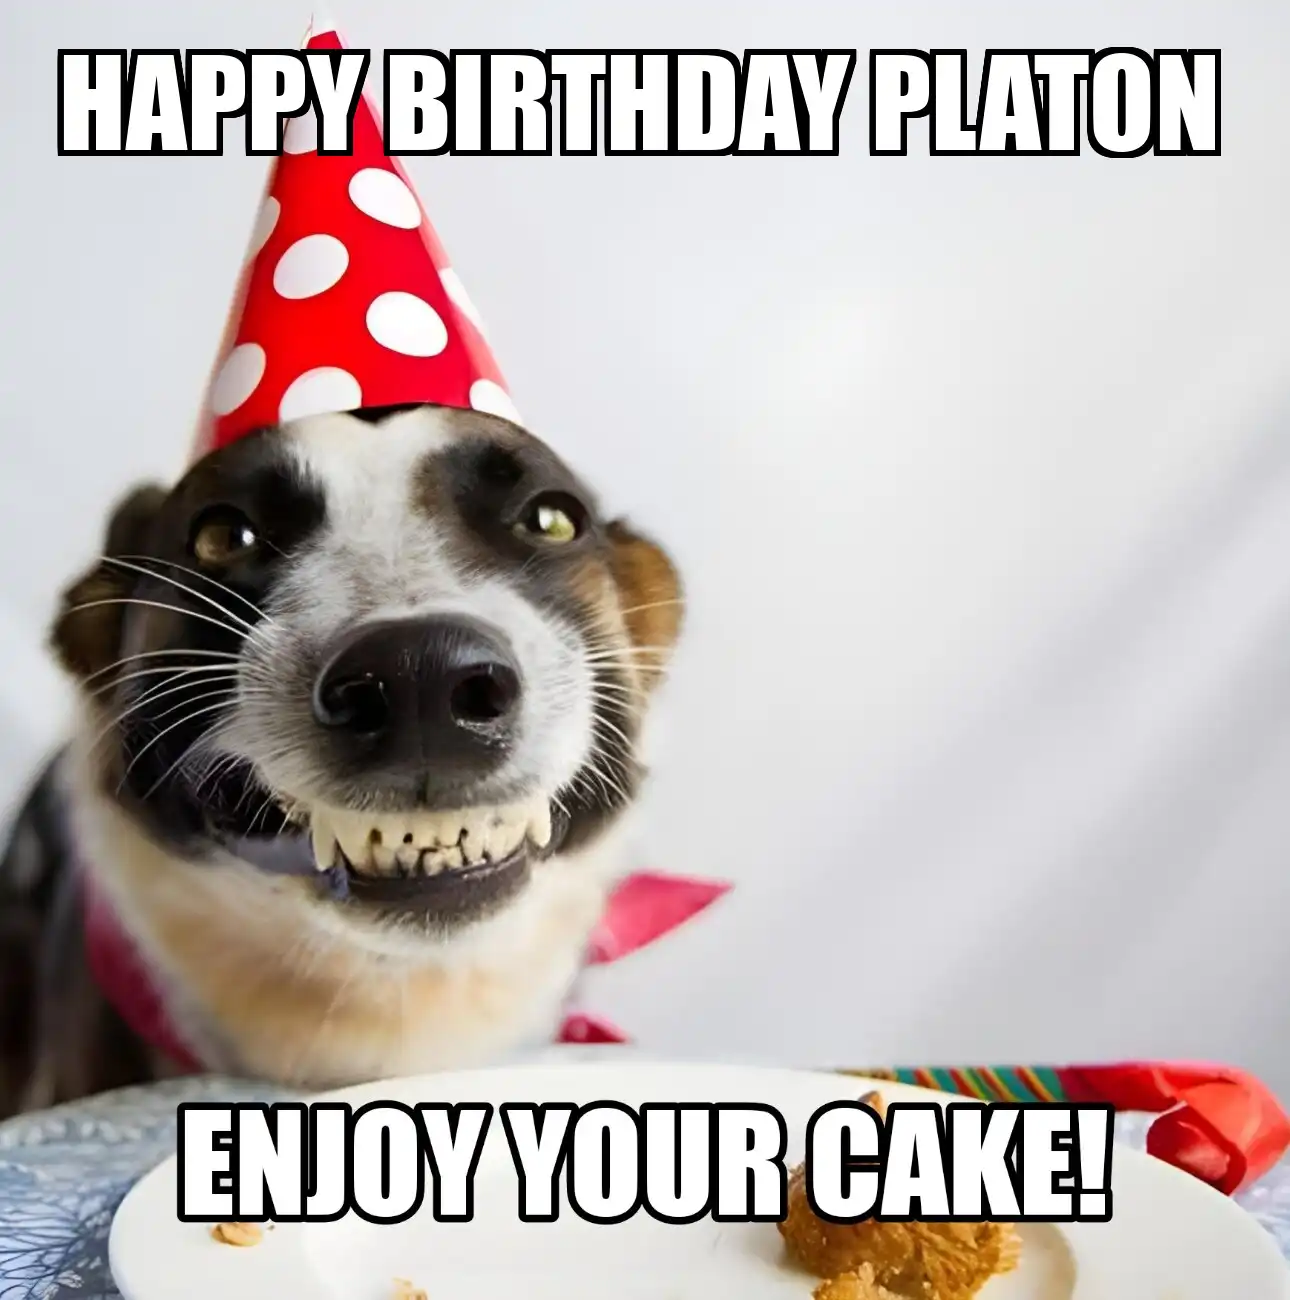 Happy Birthday Platon Enjoy Your Cake Dog Meme